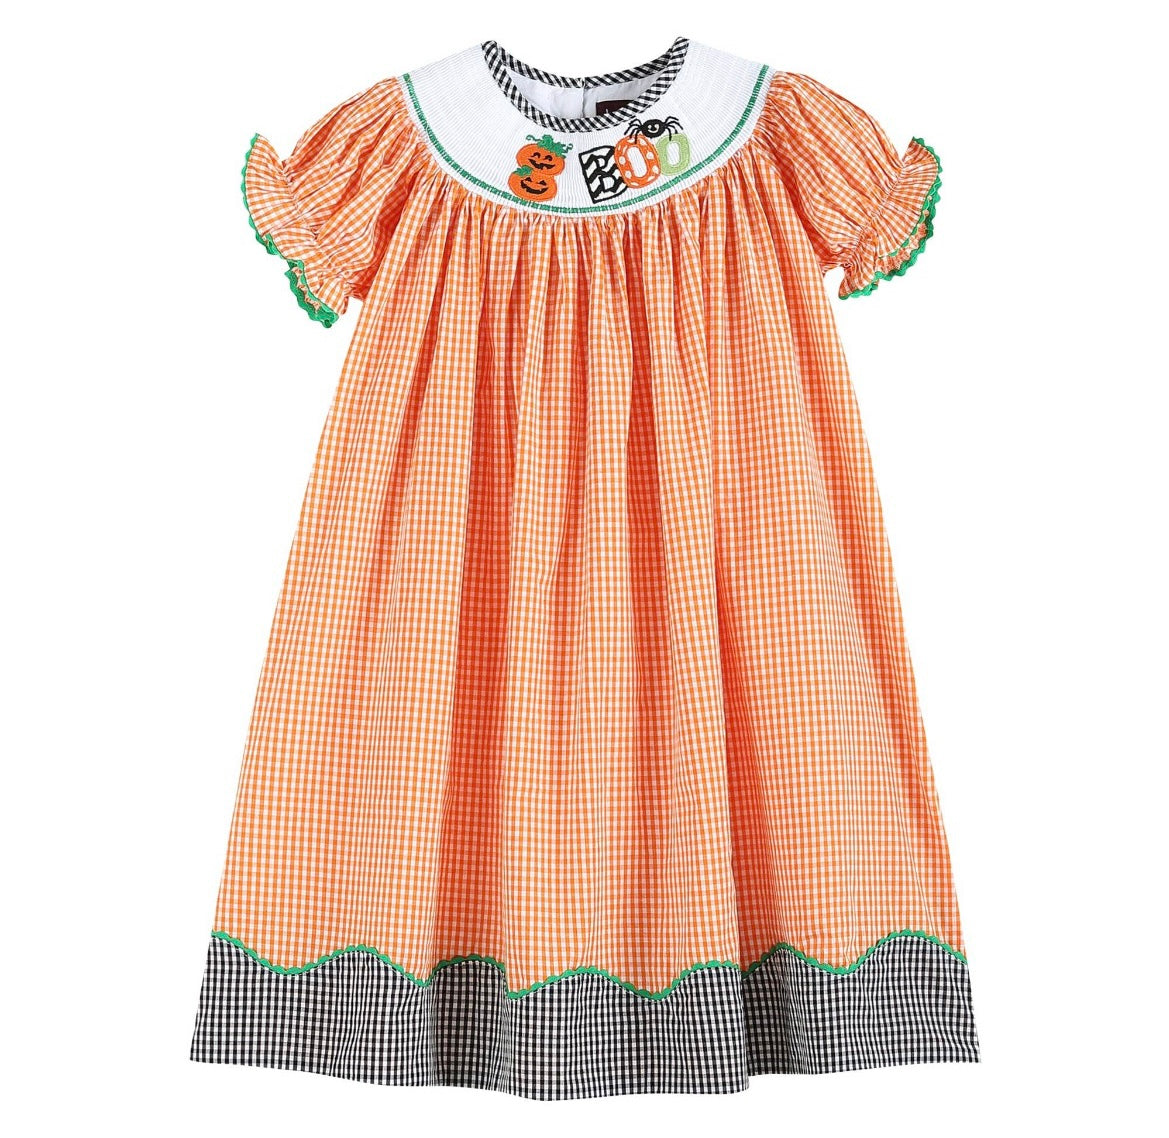 Gingham Smocked Dress - Orange Boo